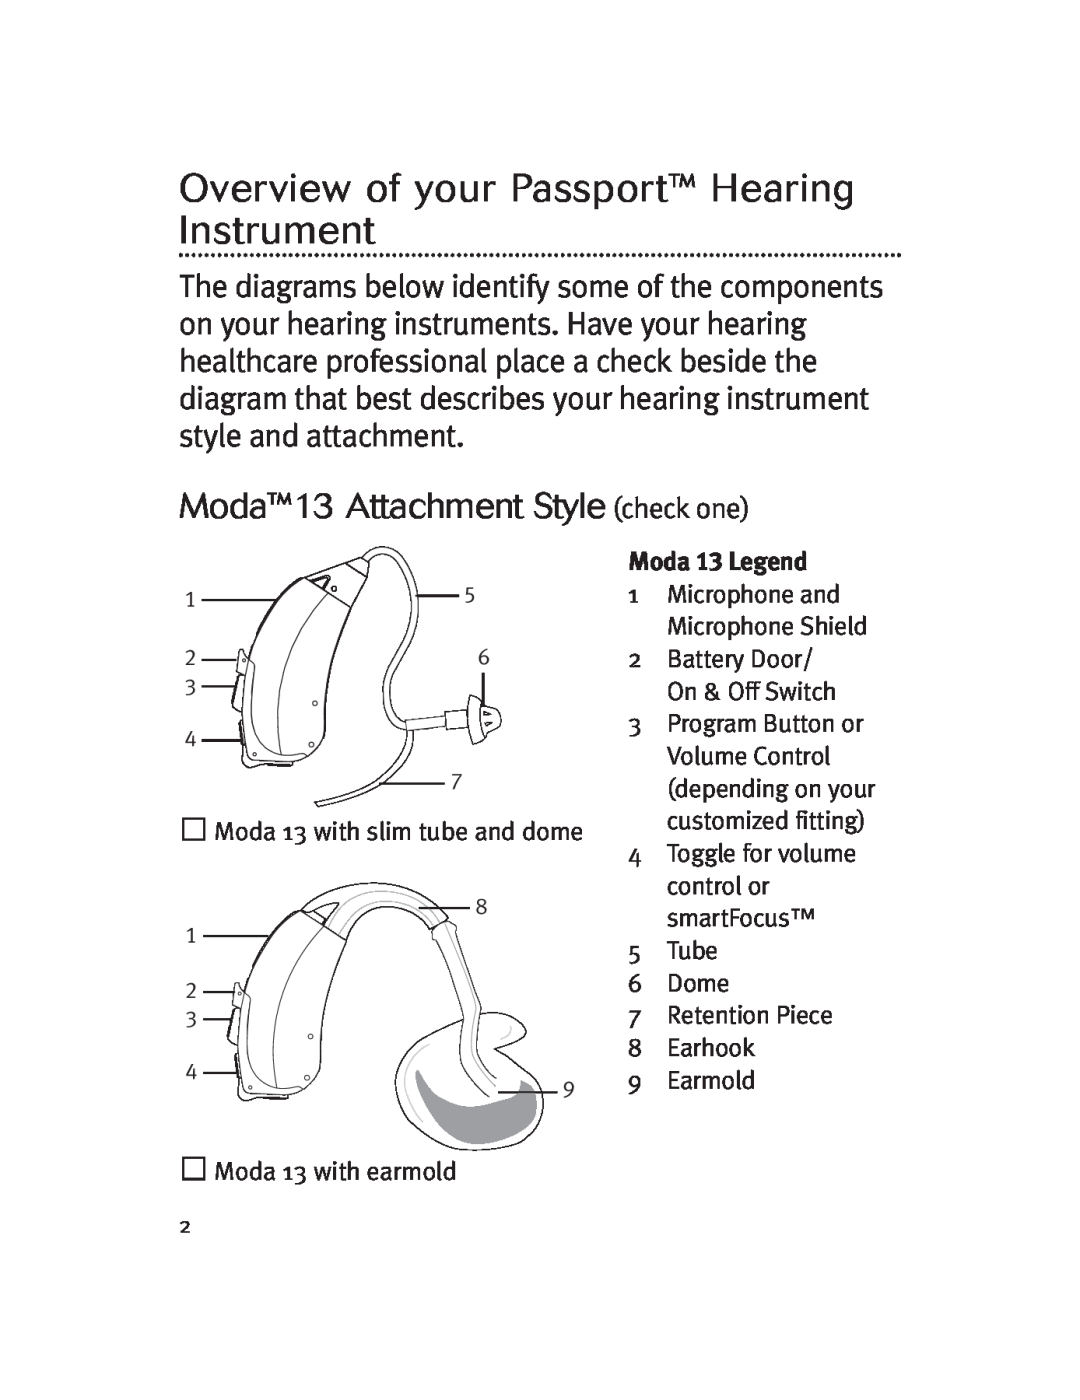 Unitron Hearing Aid Moxi 13, Moda 13 manual Overview of your Passport Hearing Instrument, Moda13 Attachment Style check one 